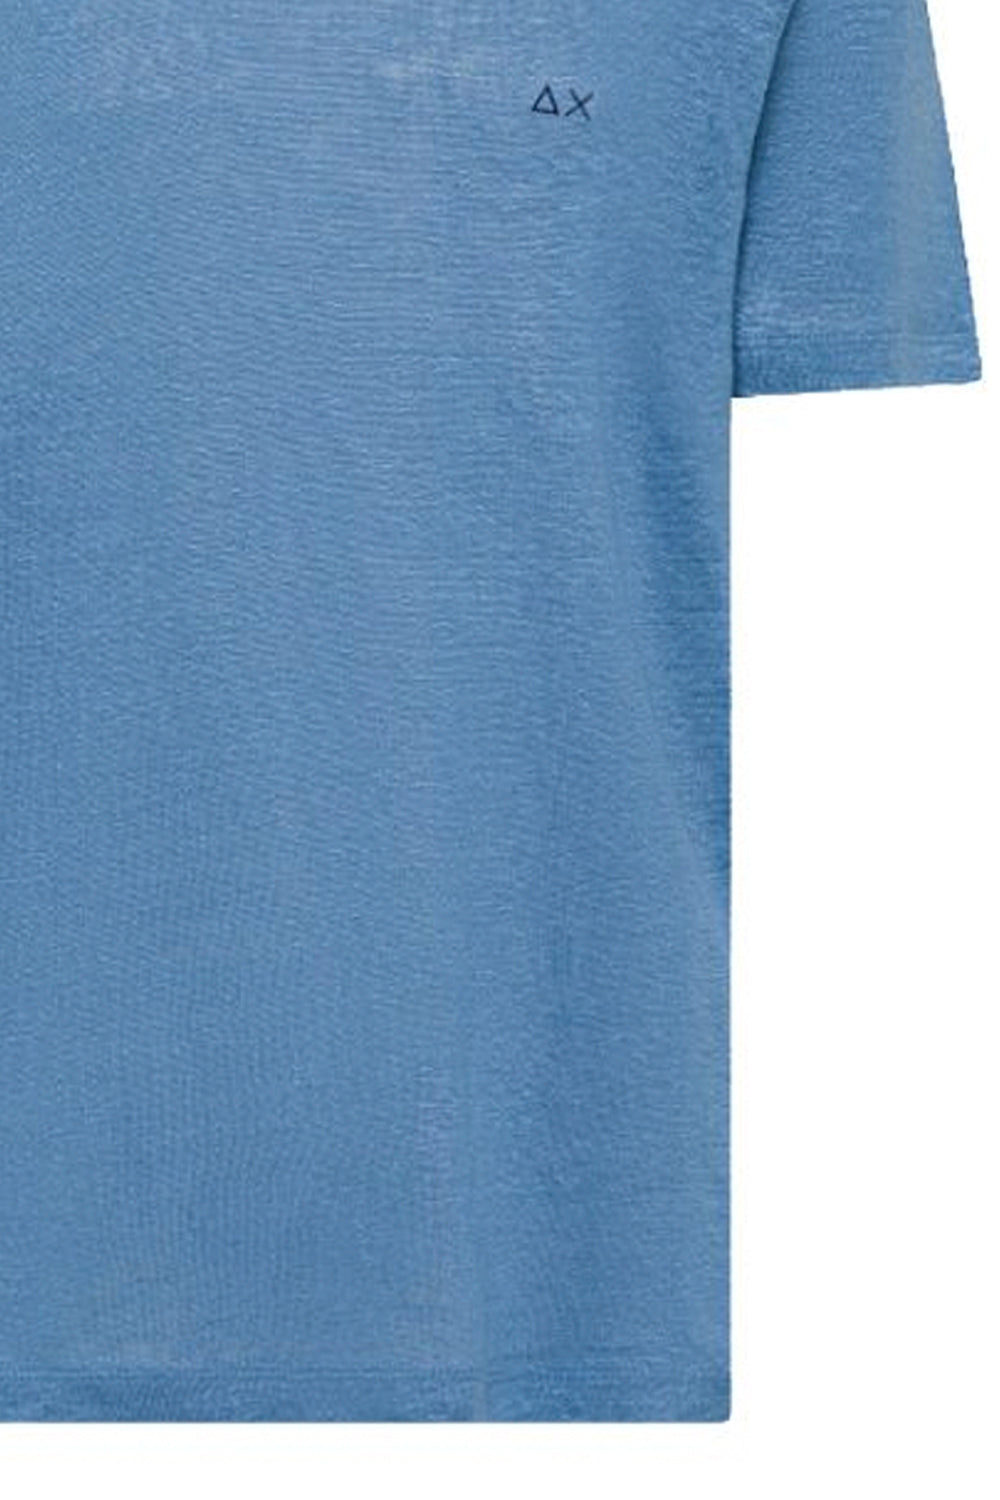 SUN 68 T-shirt girocollo in lino